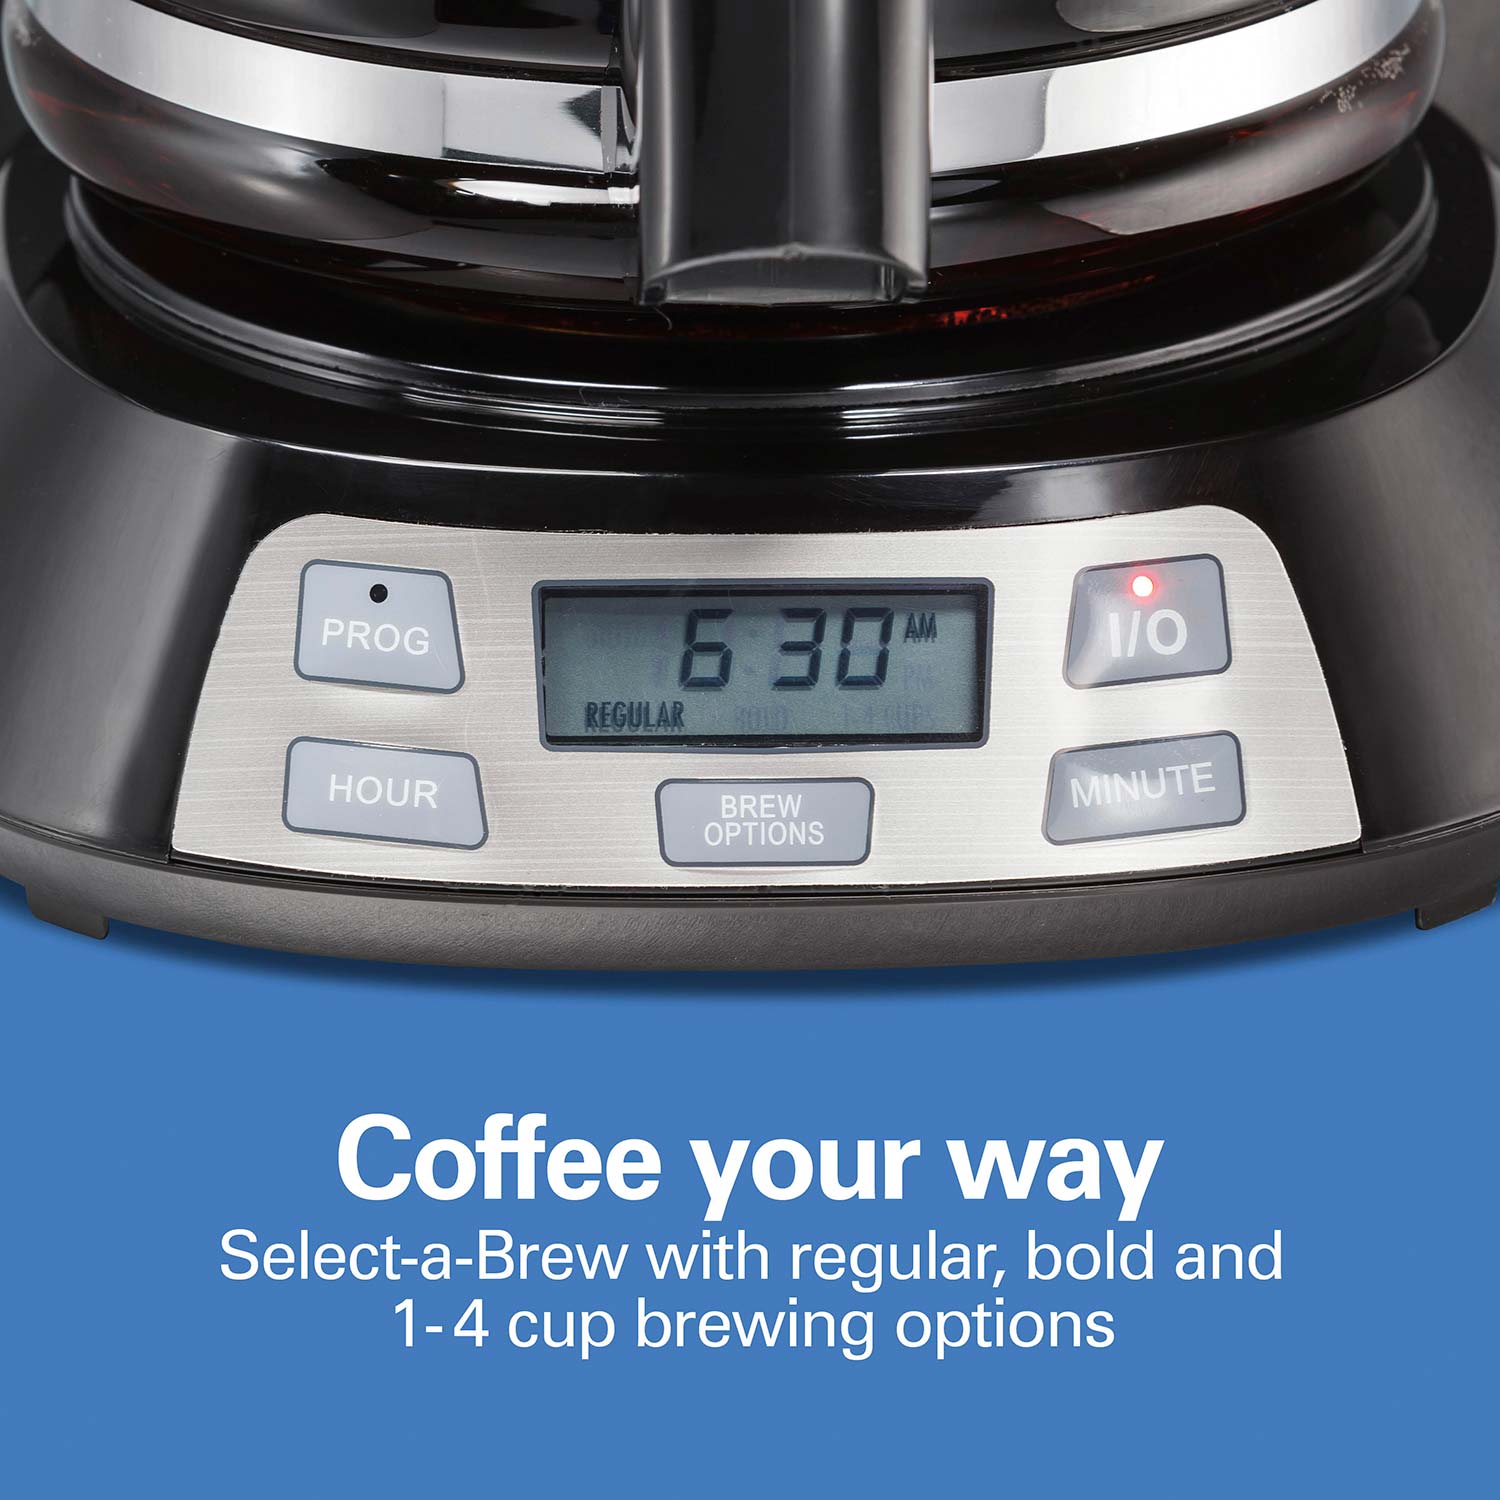  Hamilton Beach 49615C 12 Cup Programmable Coffee Maker Black: Drip  Coffeemakers: Home & Kitchen